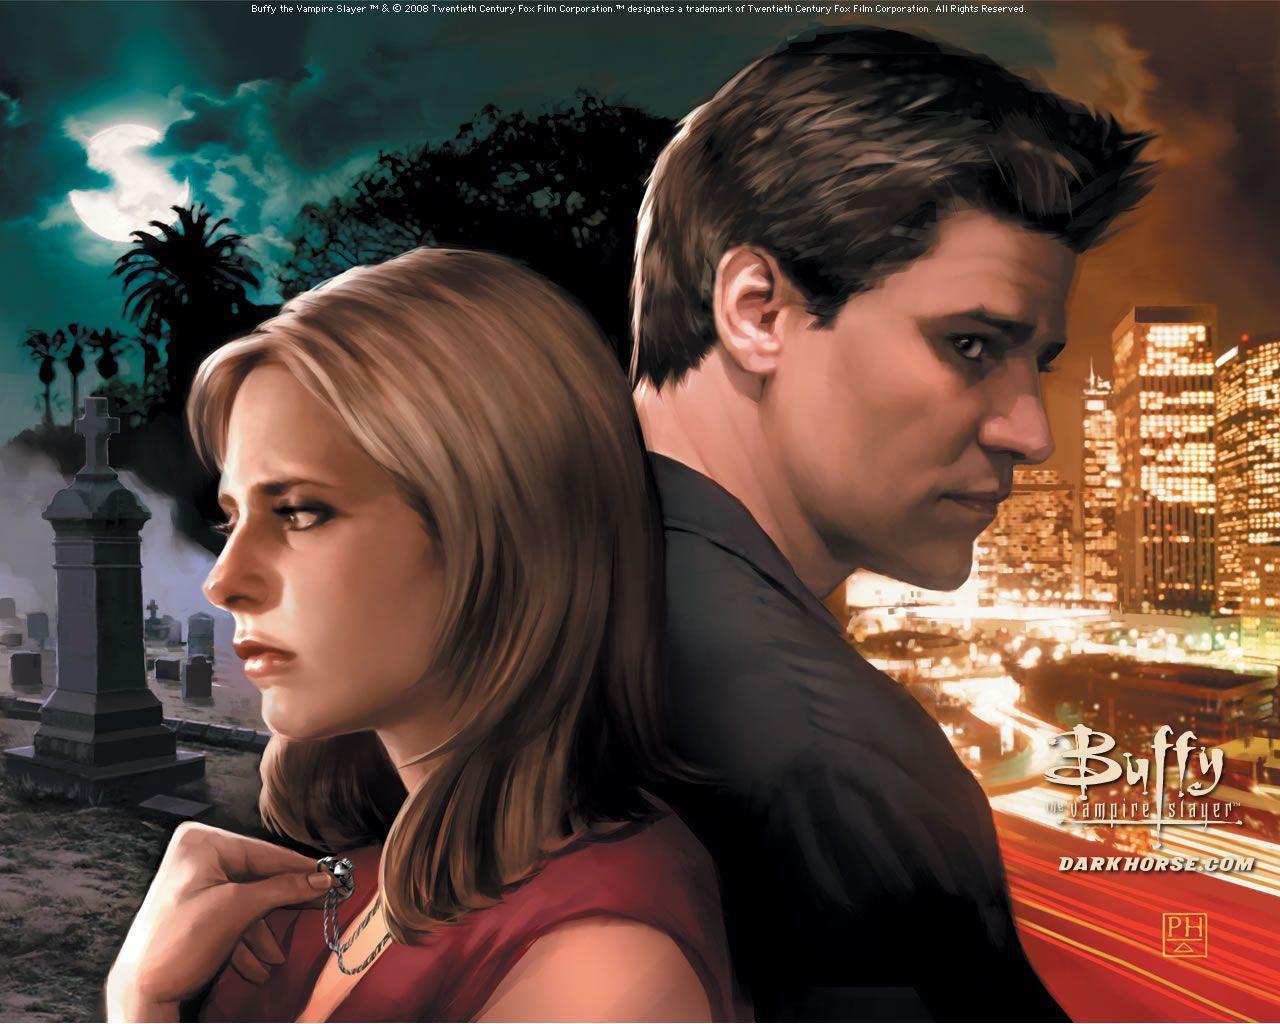 Buffy the Vampire Slayer - Desktops - Dark Horse Comics